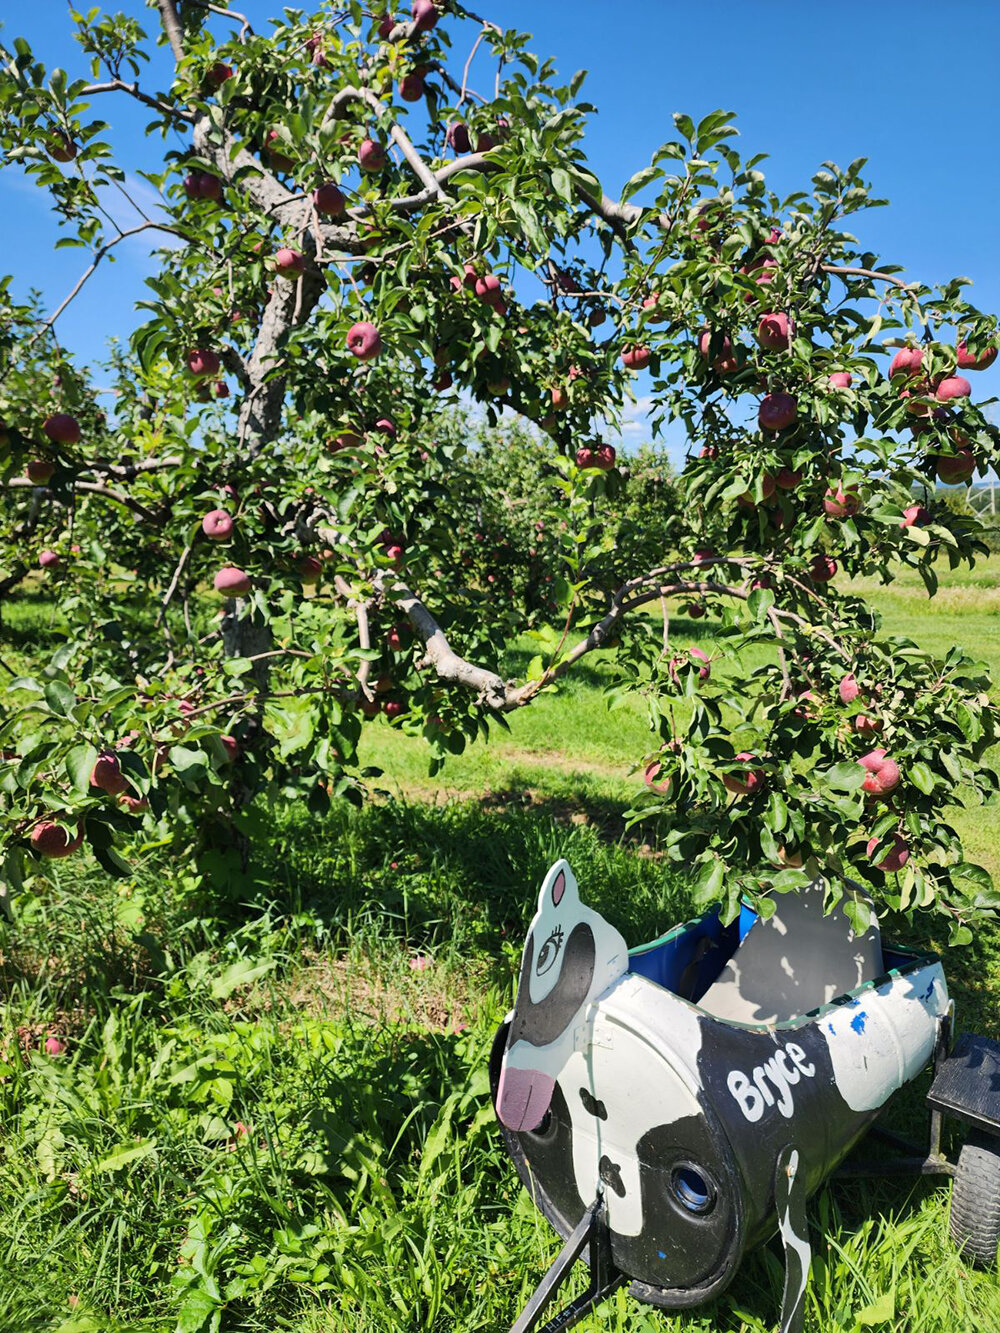 Apple picking trees at Hurds farm